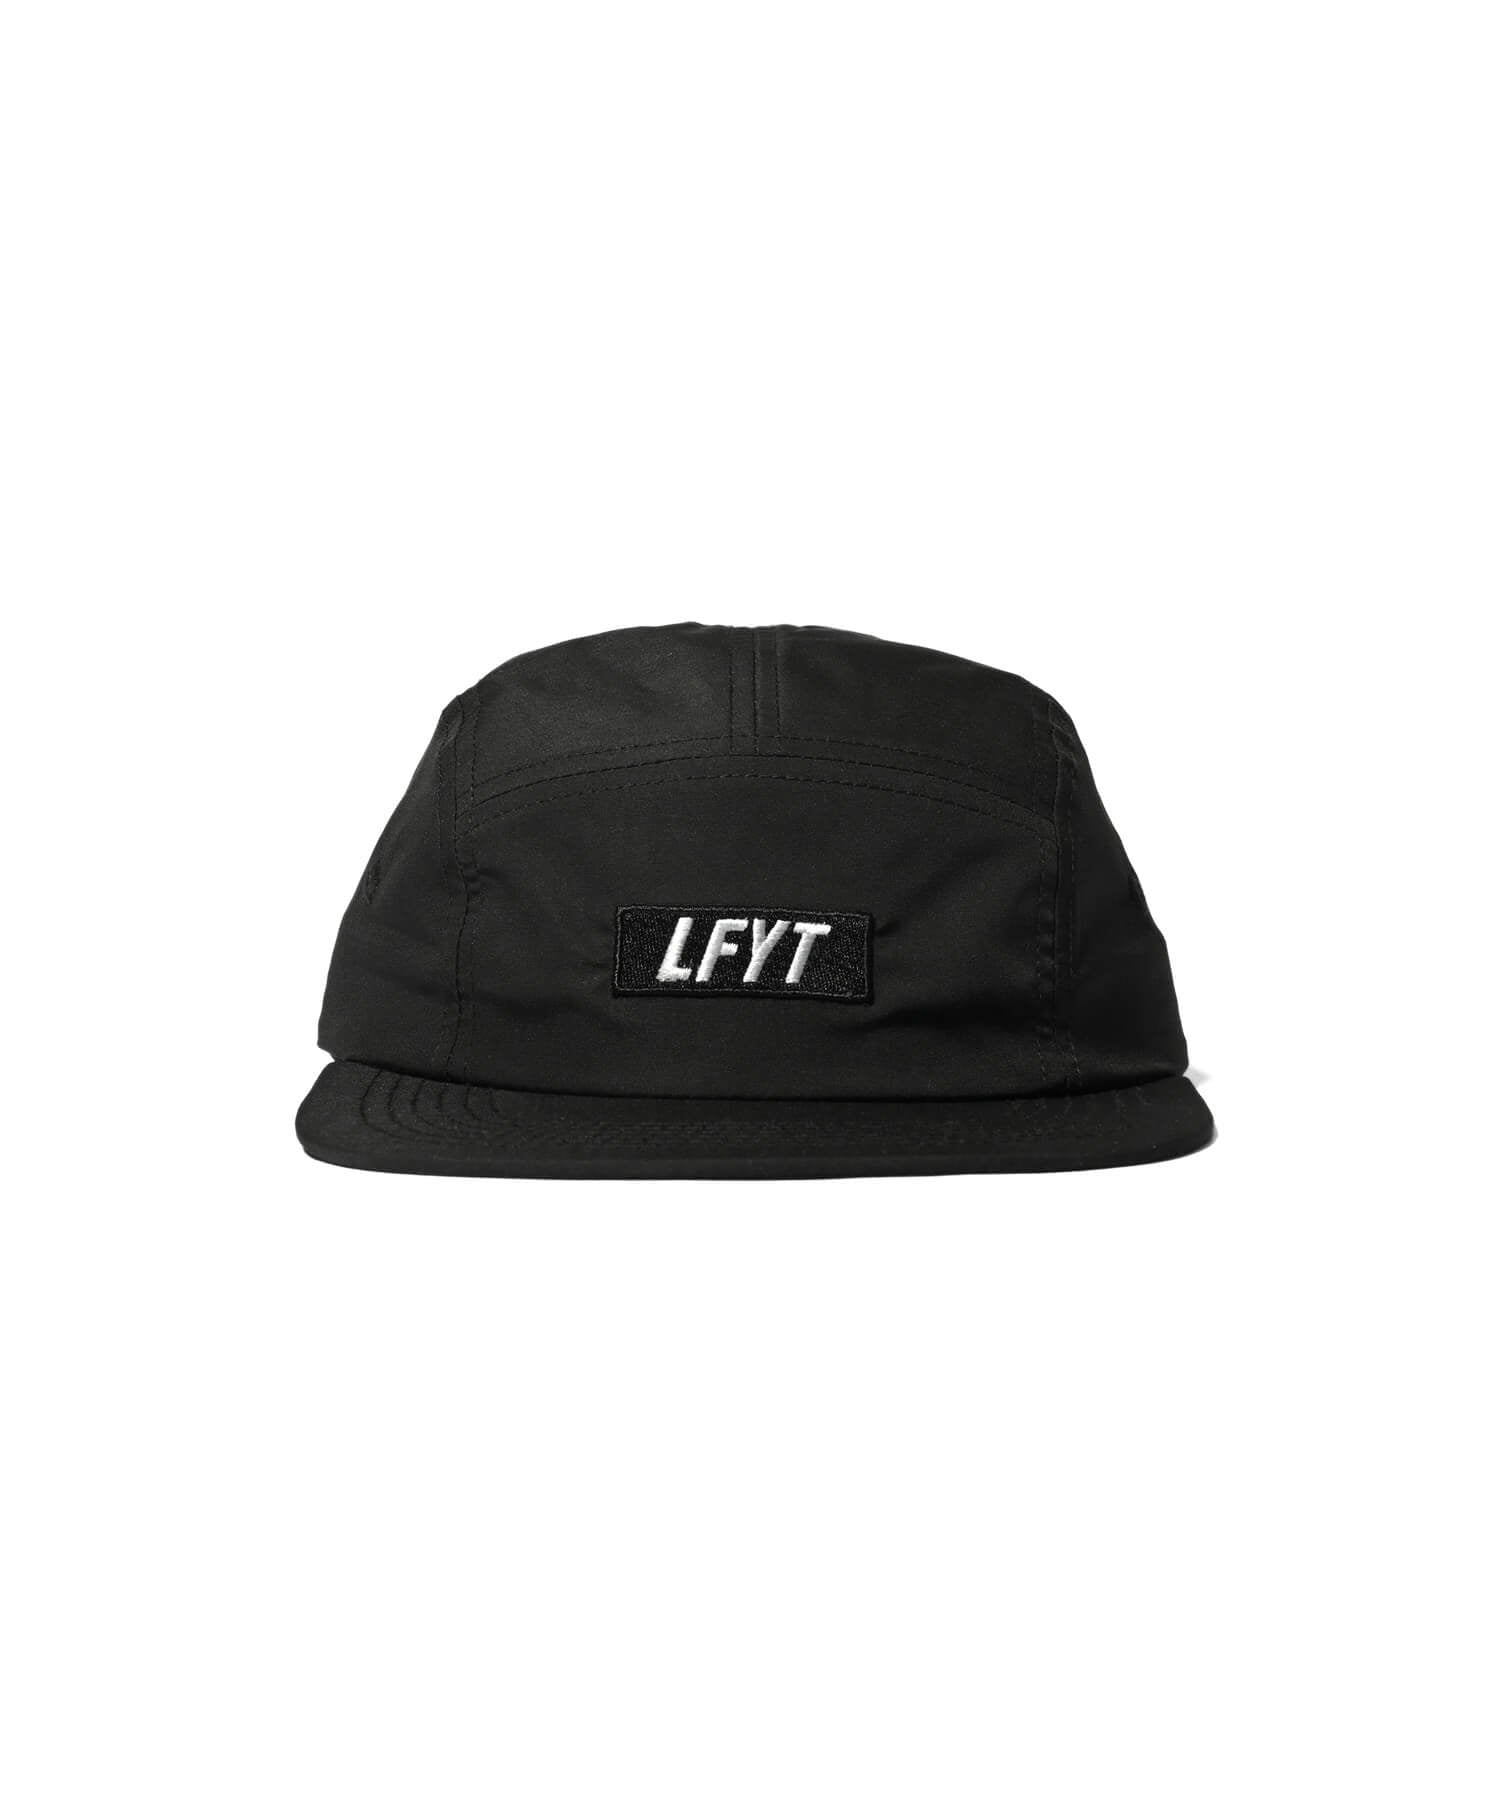 LFYT - LFYT BOX LOGO 露營帽 LA231410